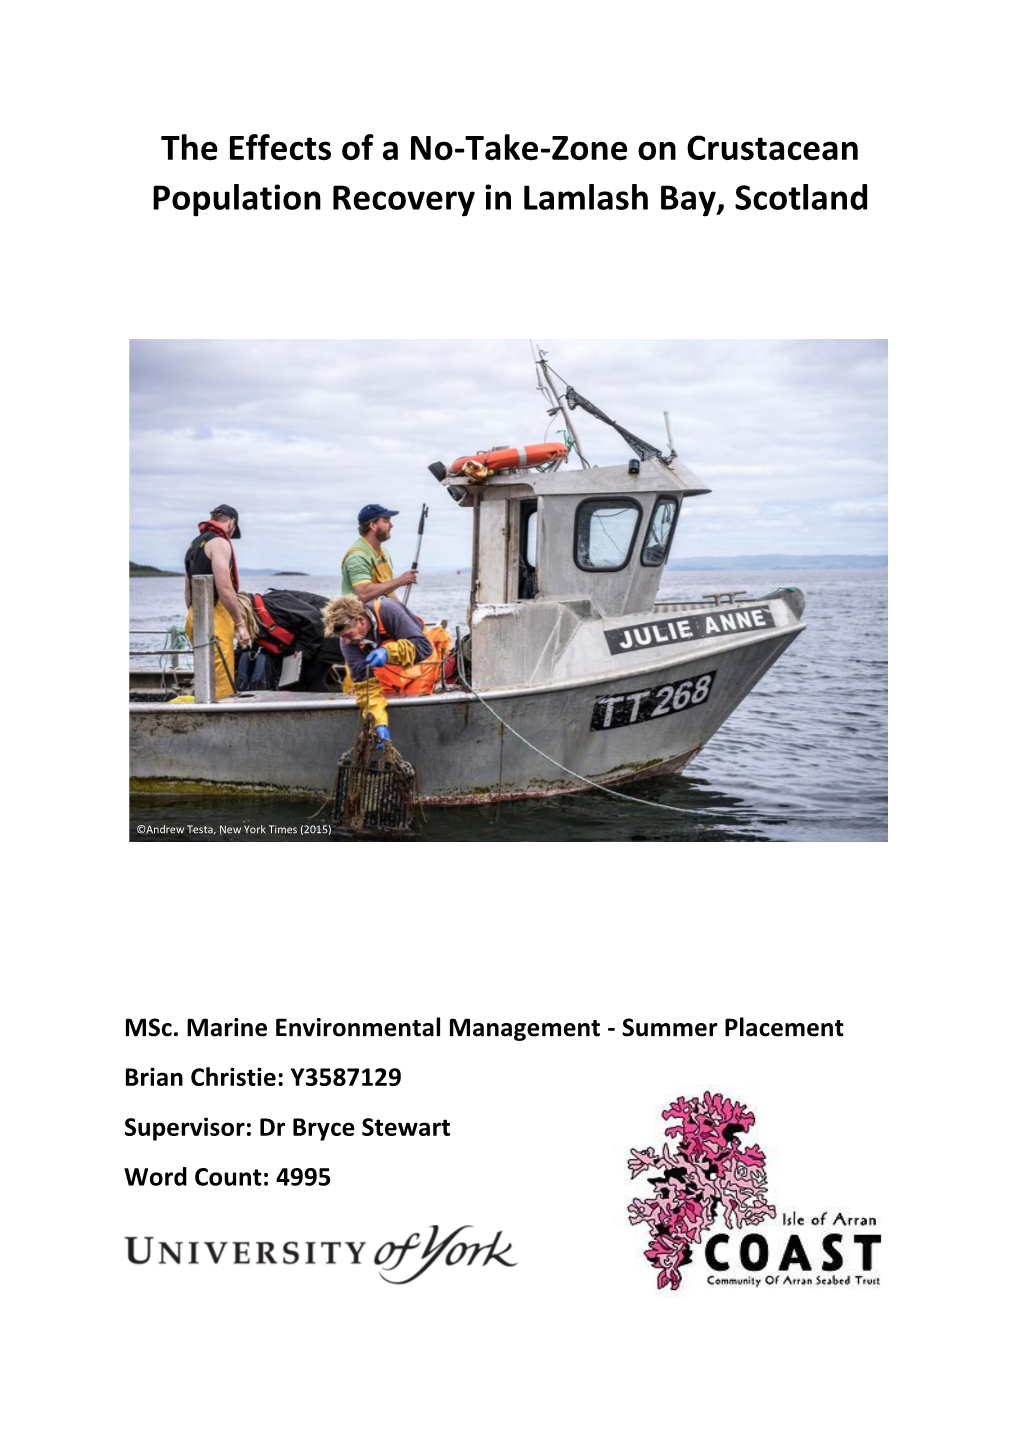 2015 Christie NTZ Crustacean Survey Summer Placement Report